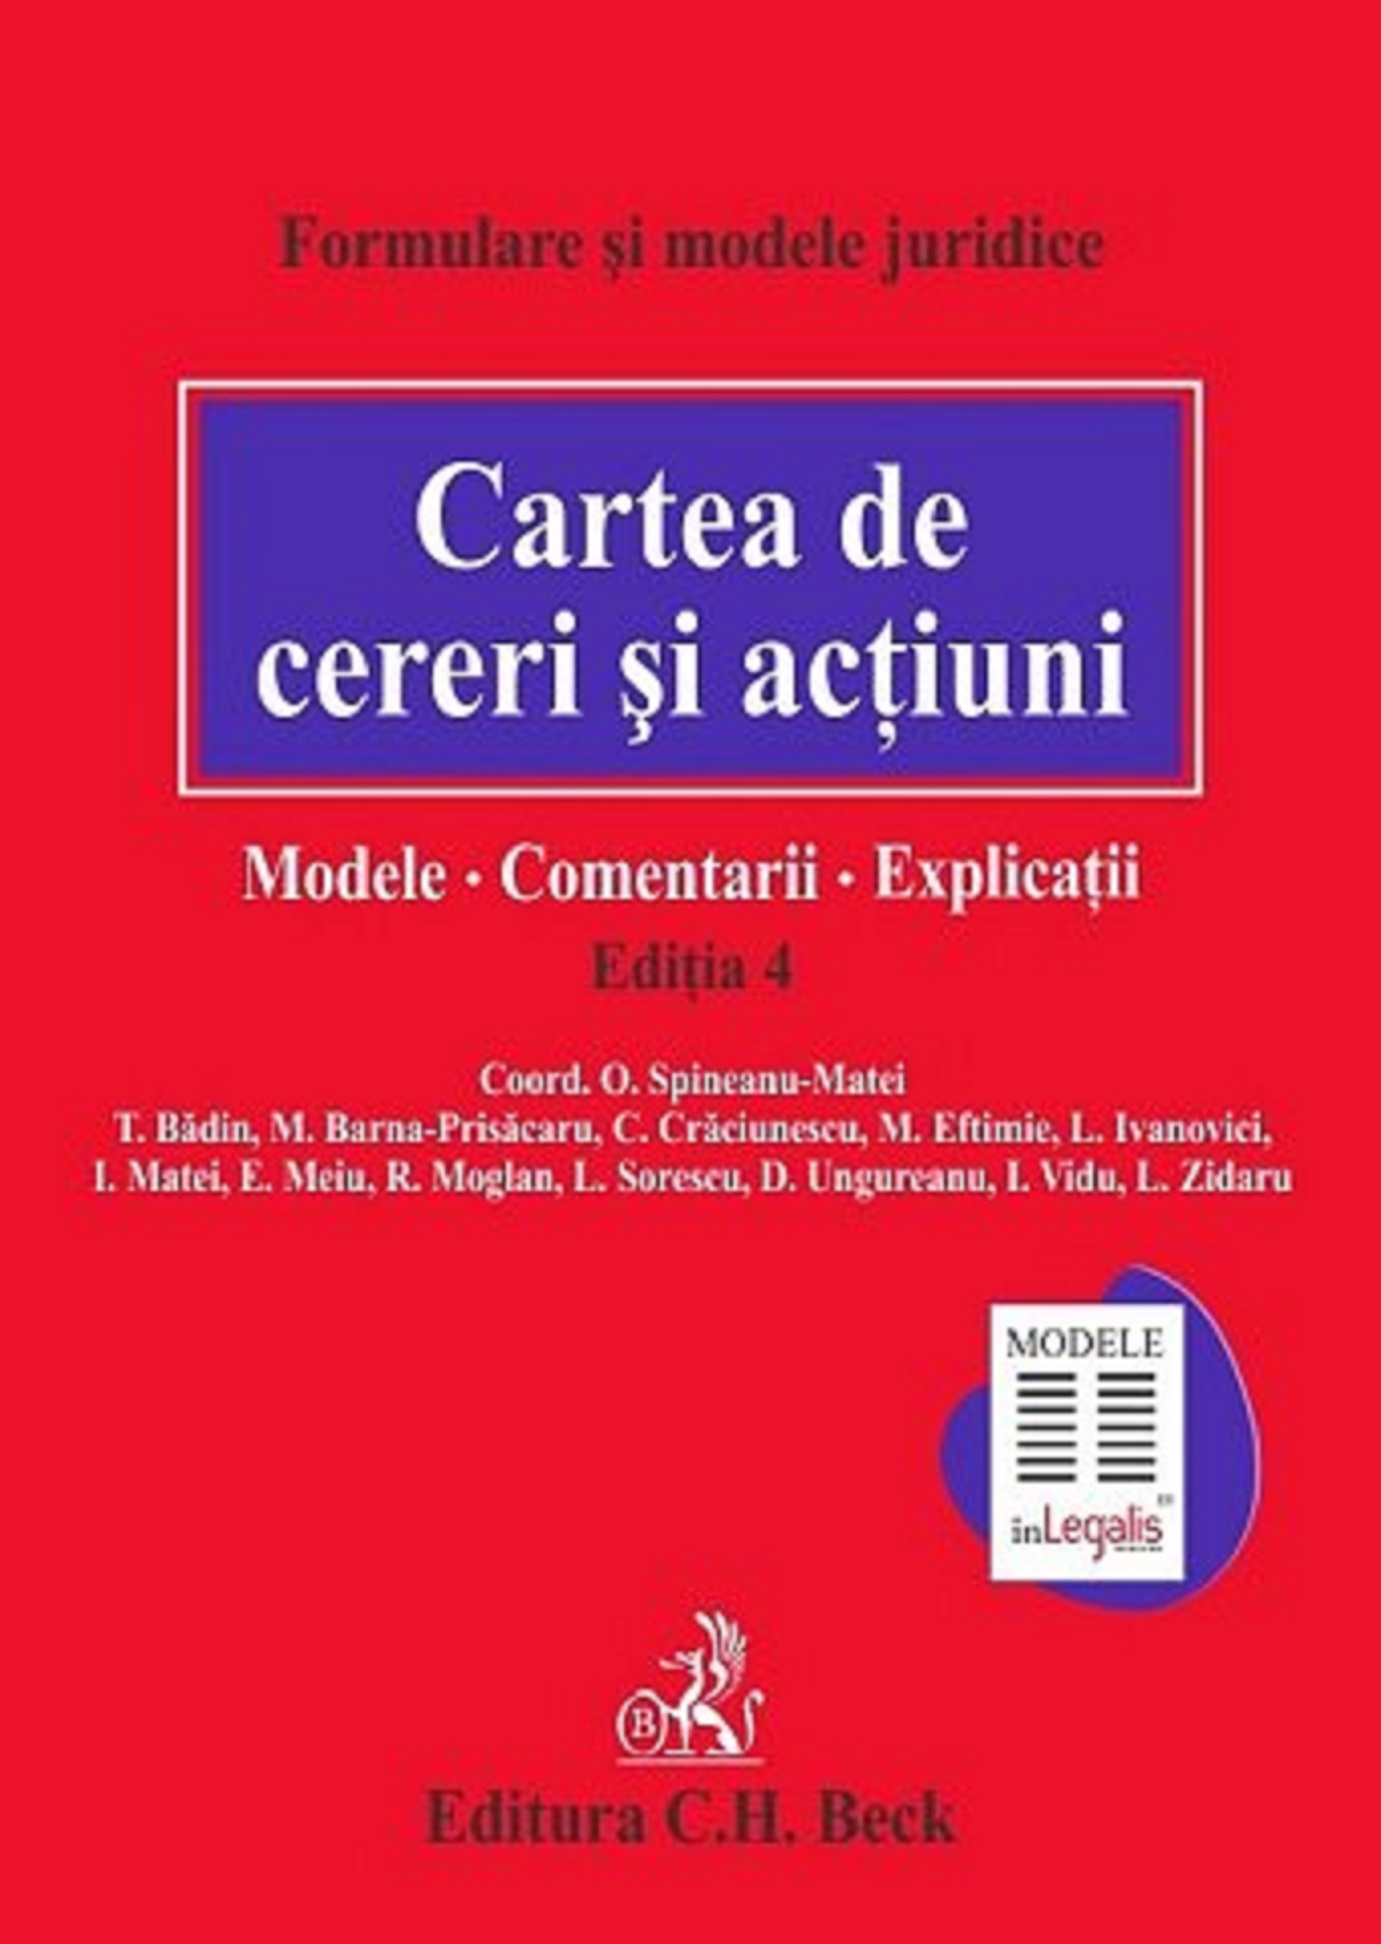 Cartea de cereri si actiuni. Modele | T. Badin, M. Barna-Prisacaru, M. Eftimie C.H. Beck poza 2022